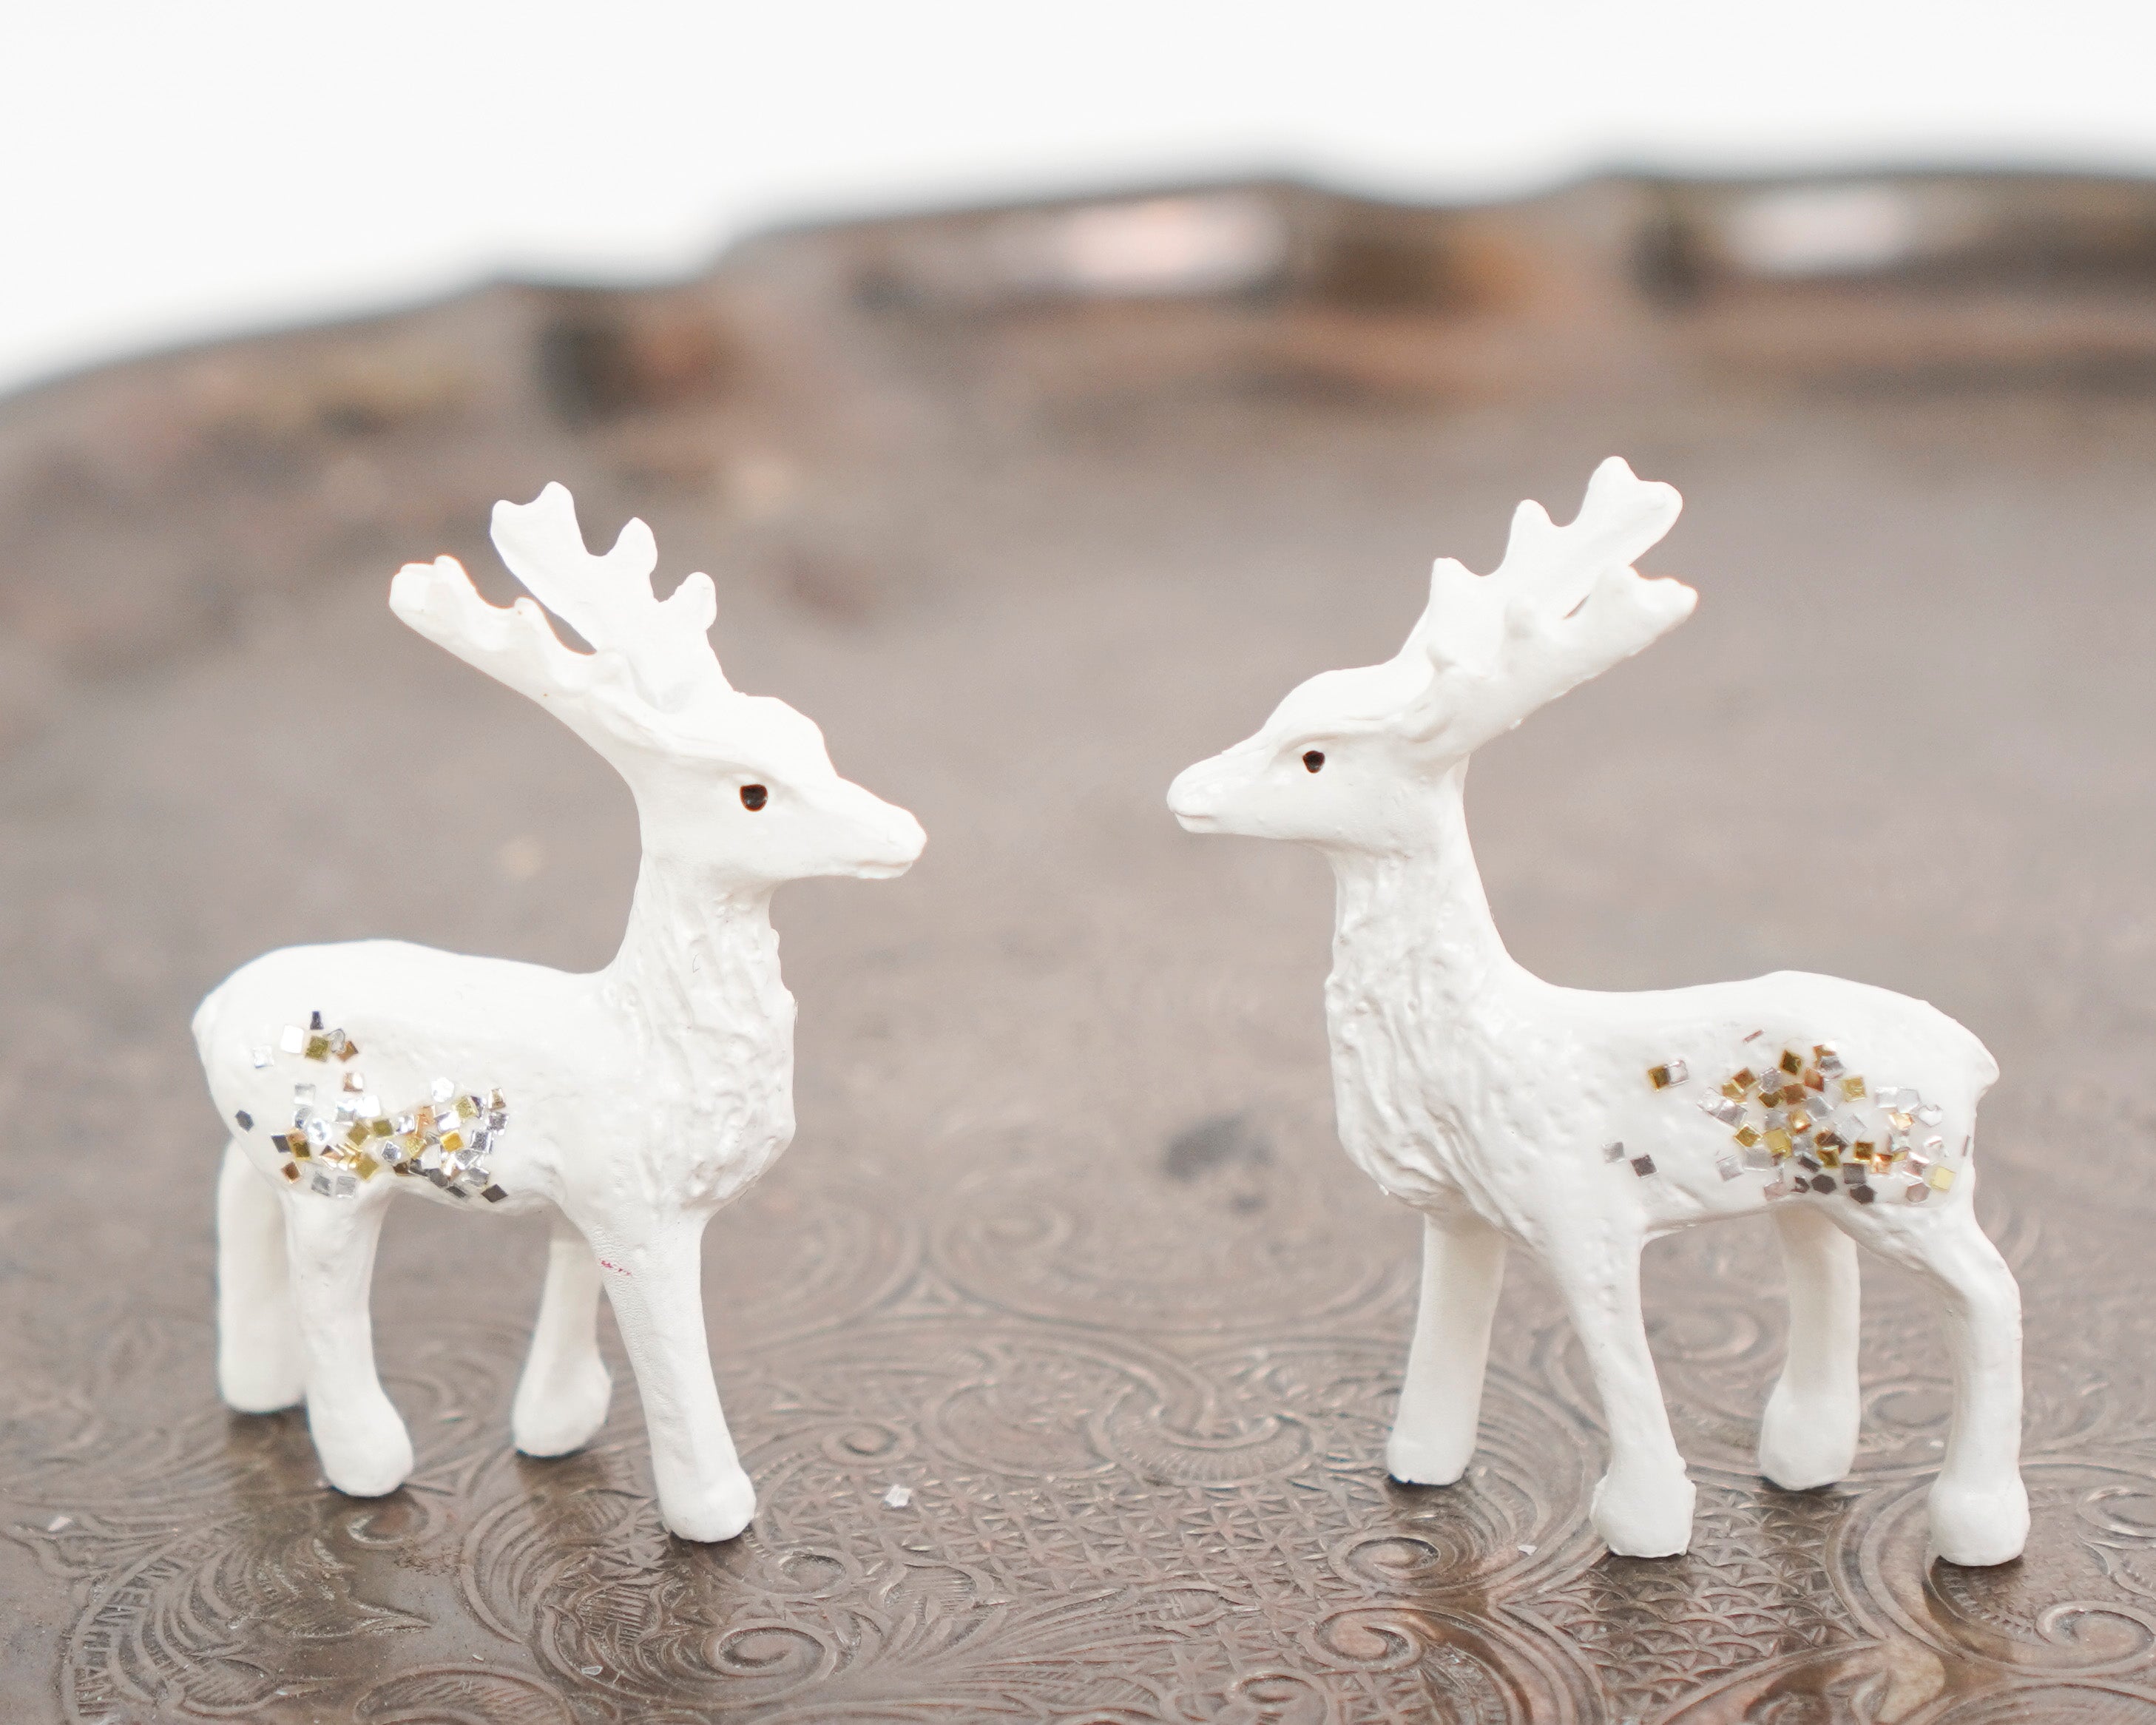 Glitter Deer - 6 Miniature Creamy White Plastic Reindeer with Vintage Glitter